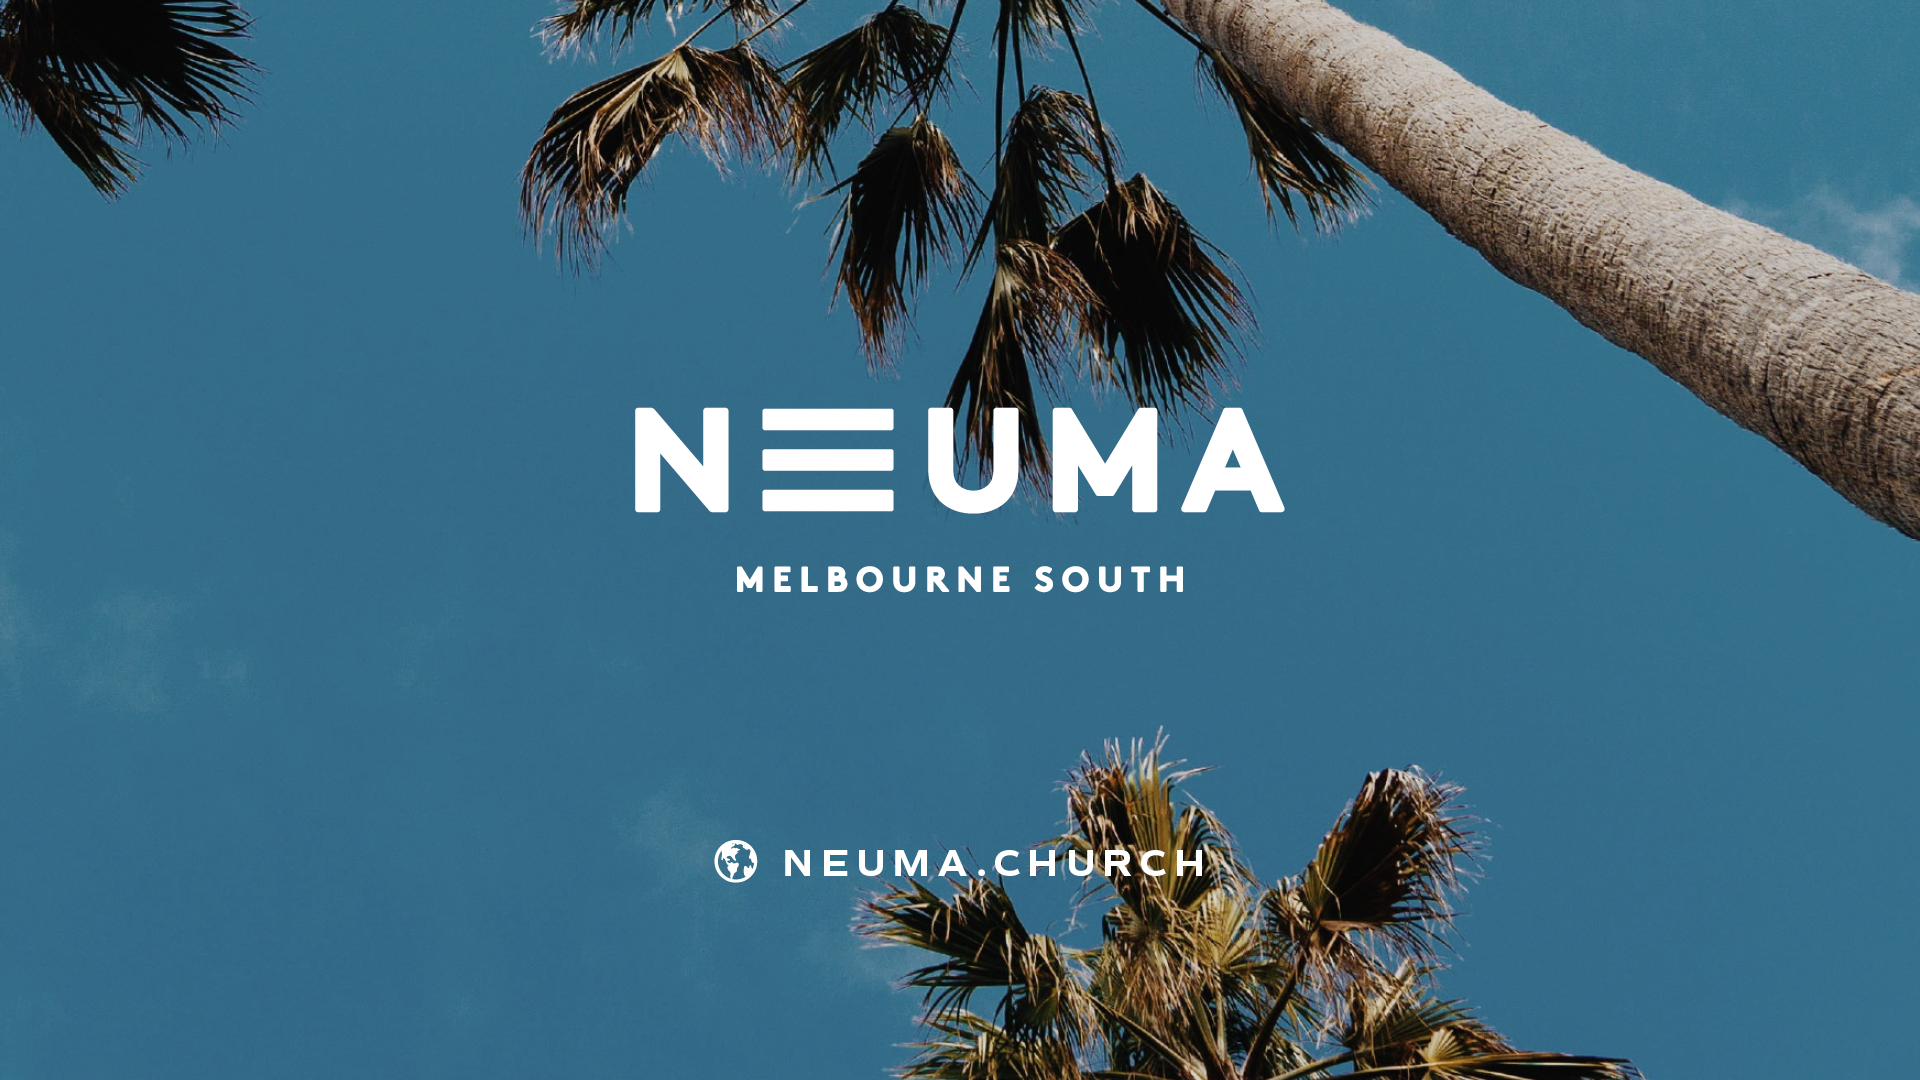 Am I A Dwelling Place? | Ps Steve Alphine | Neuma Church Melbourne South